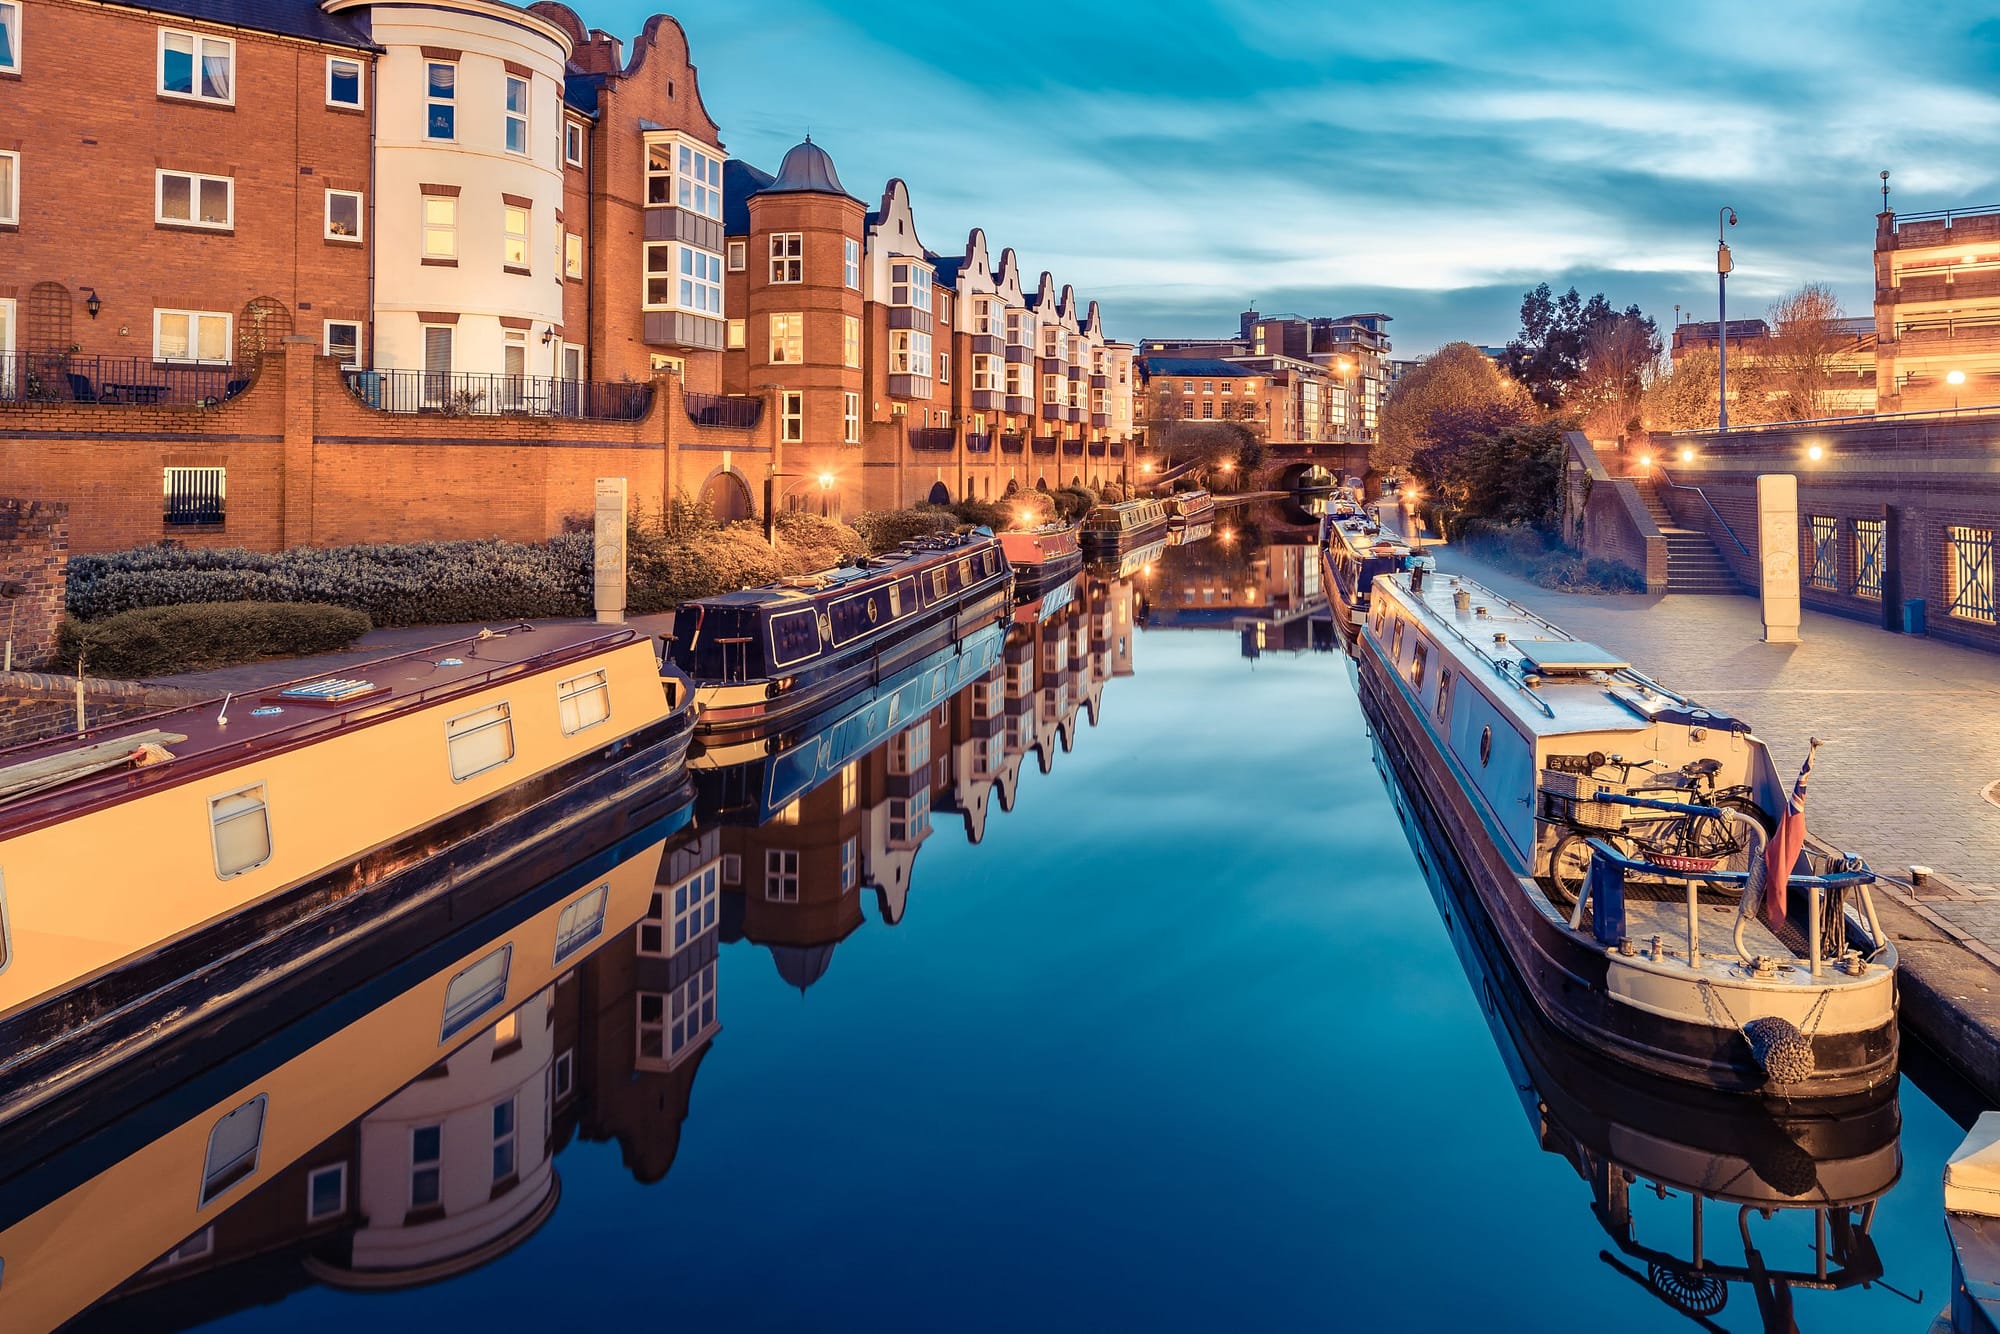 birminghams canals perfect for property investors in birmingham